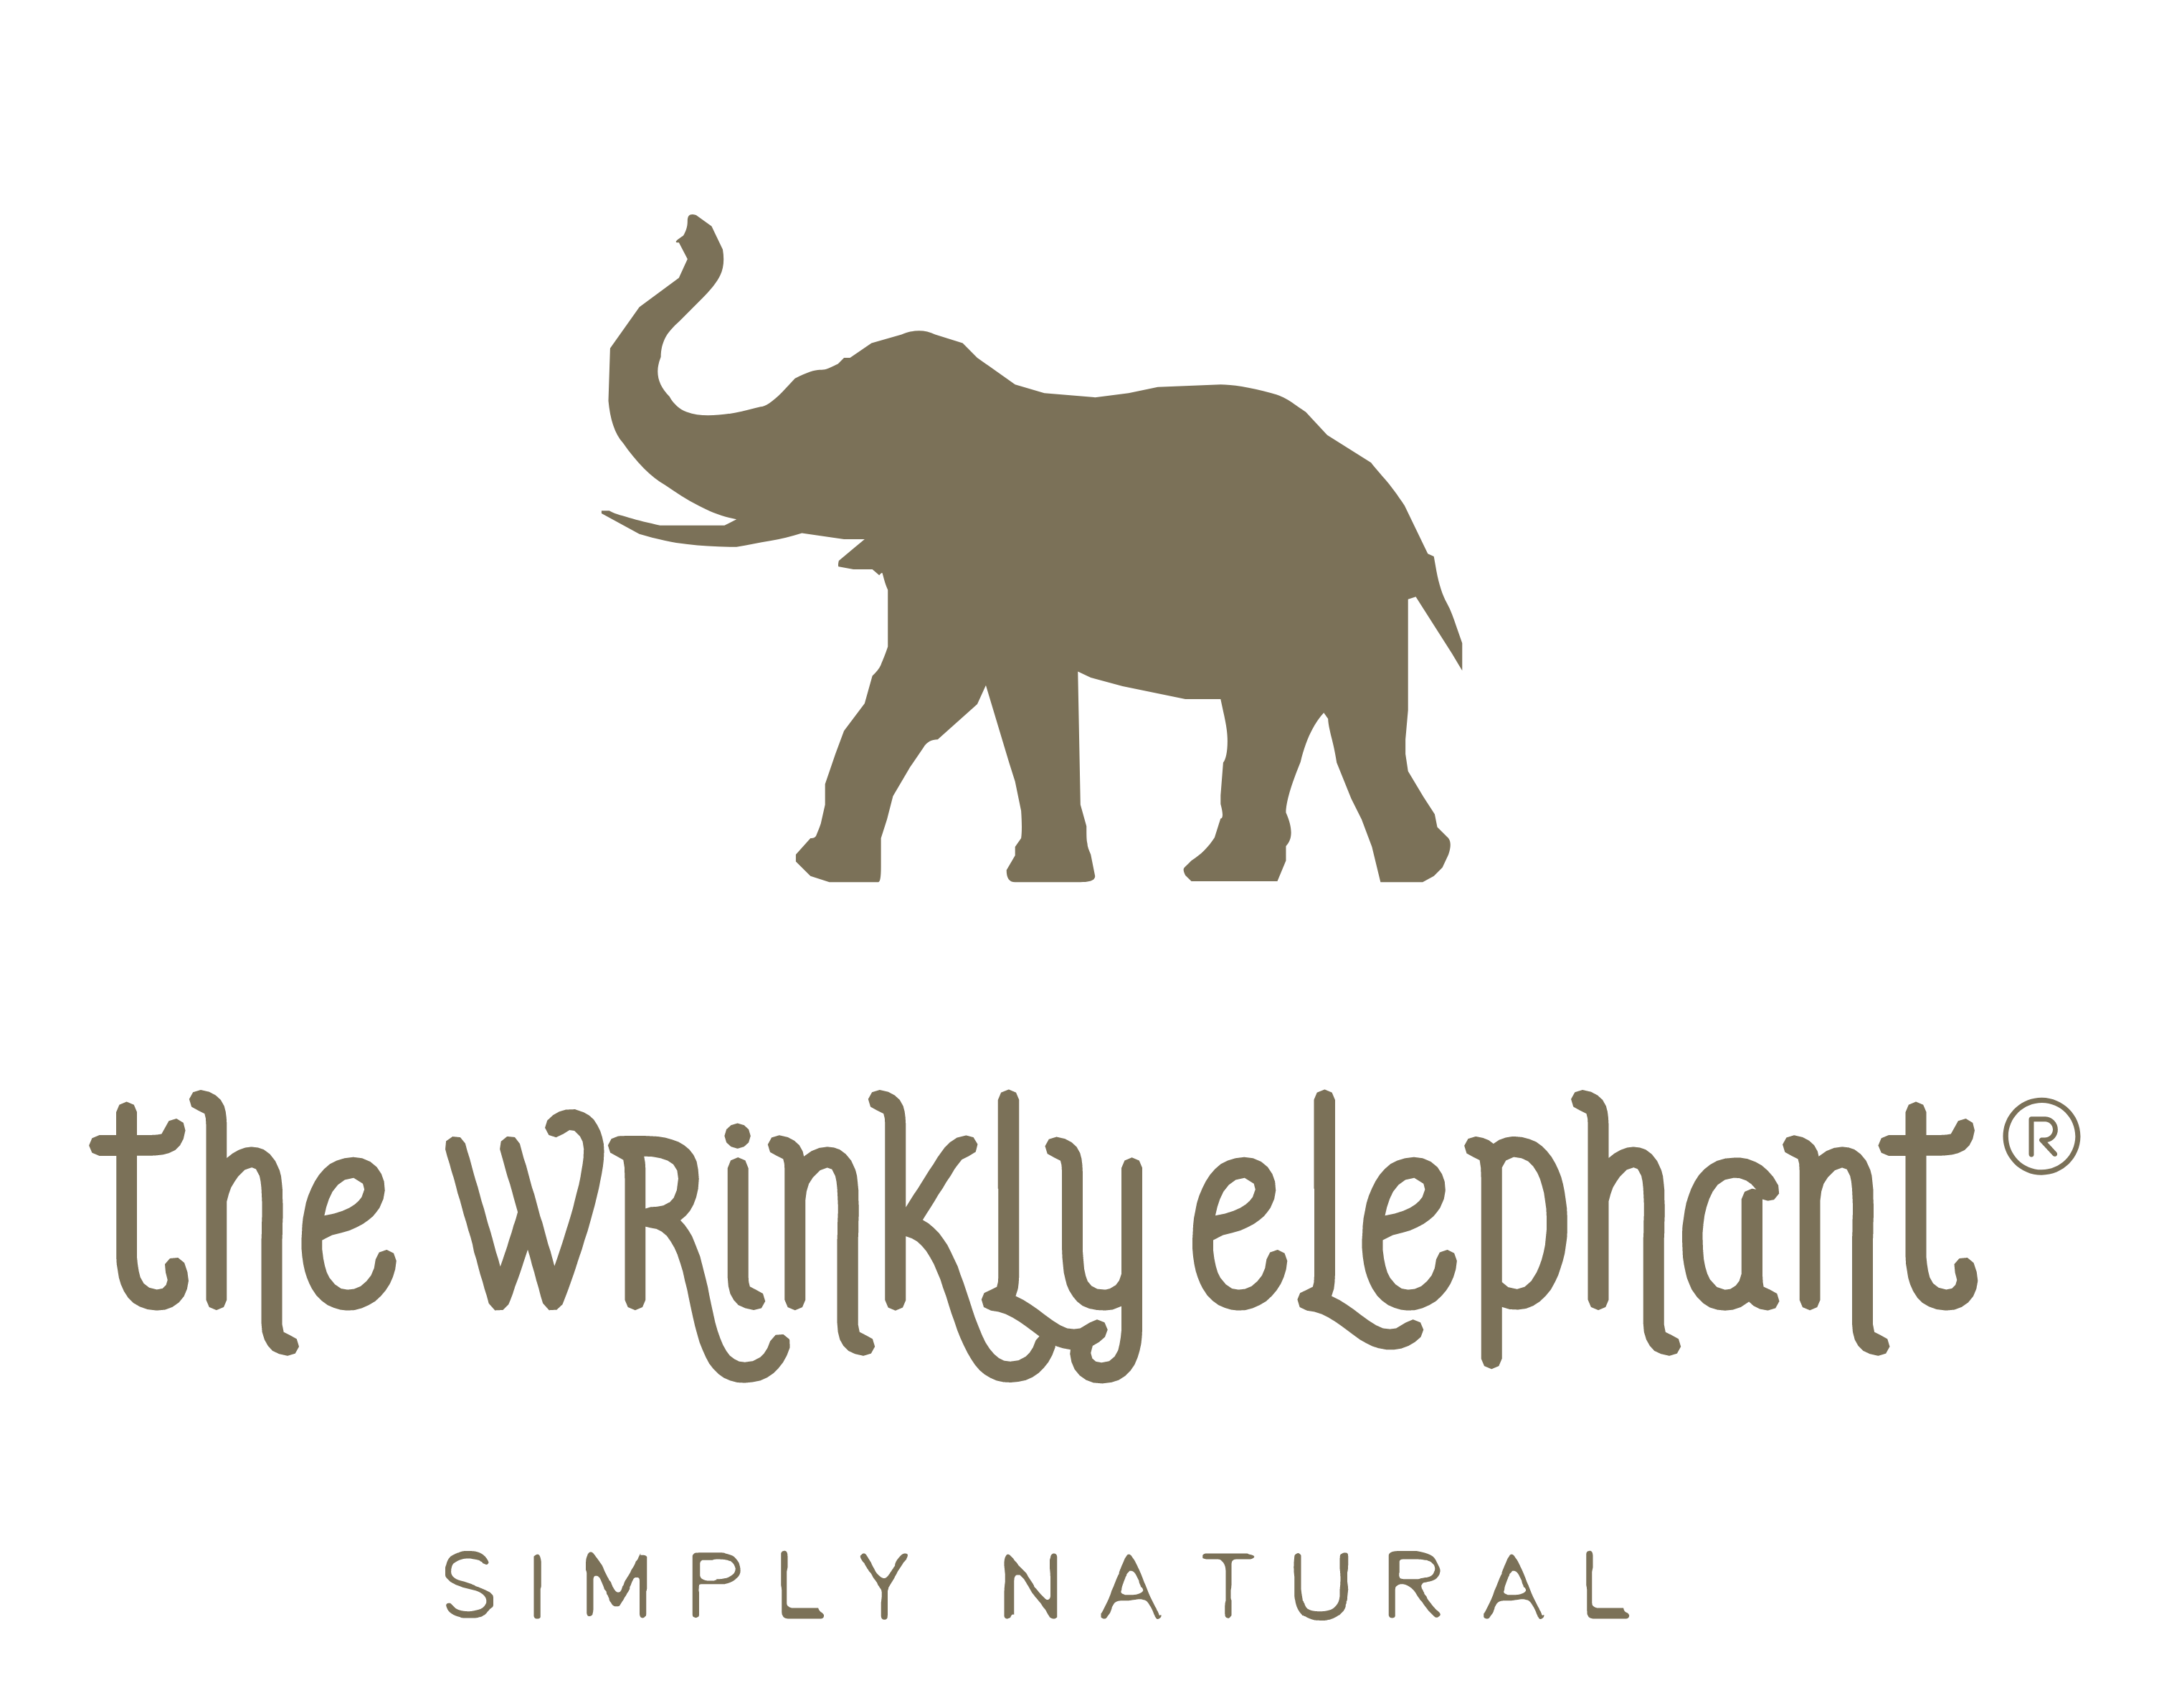 The Wrinkly Elephant logo